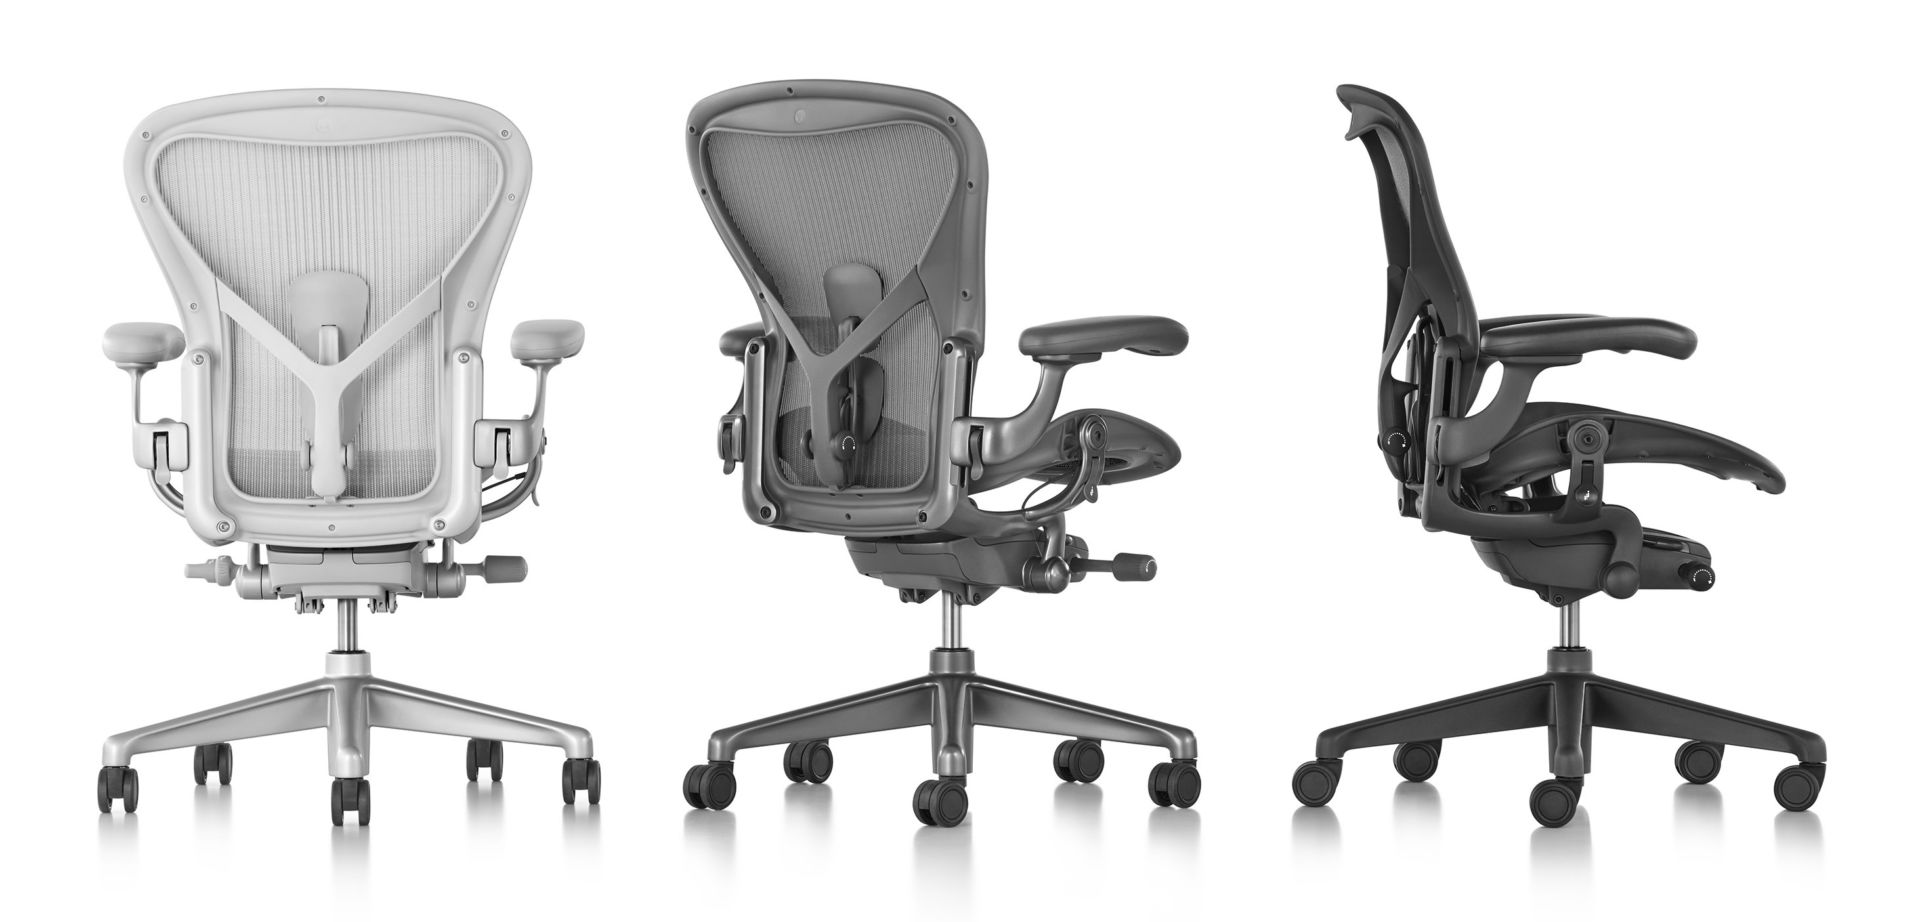 bevestigen prioriteit B olie Remastered Aeron Chair Review | Herman Miller Aeron Chair